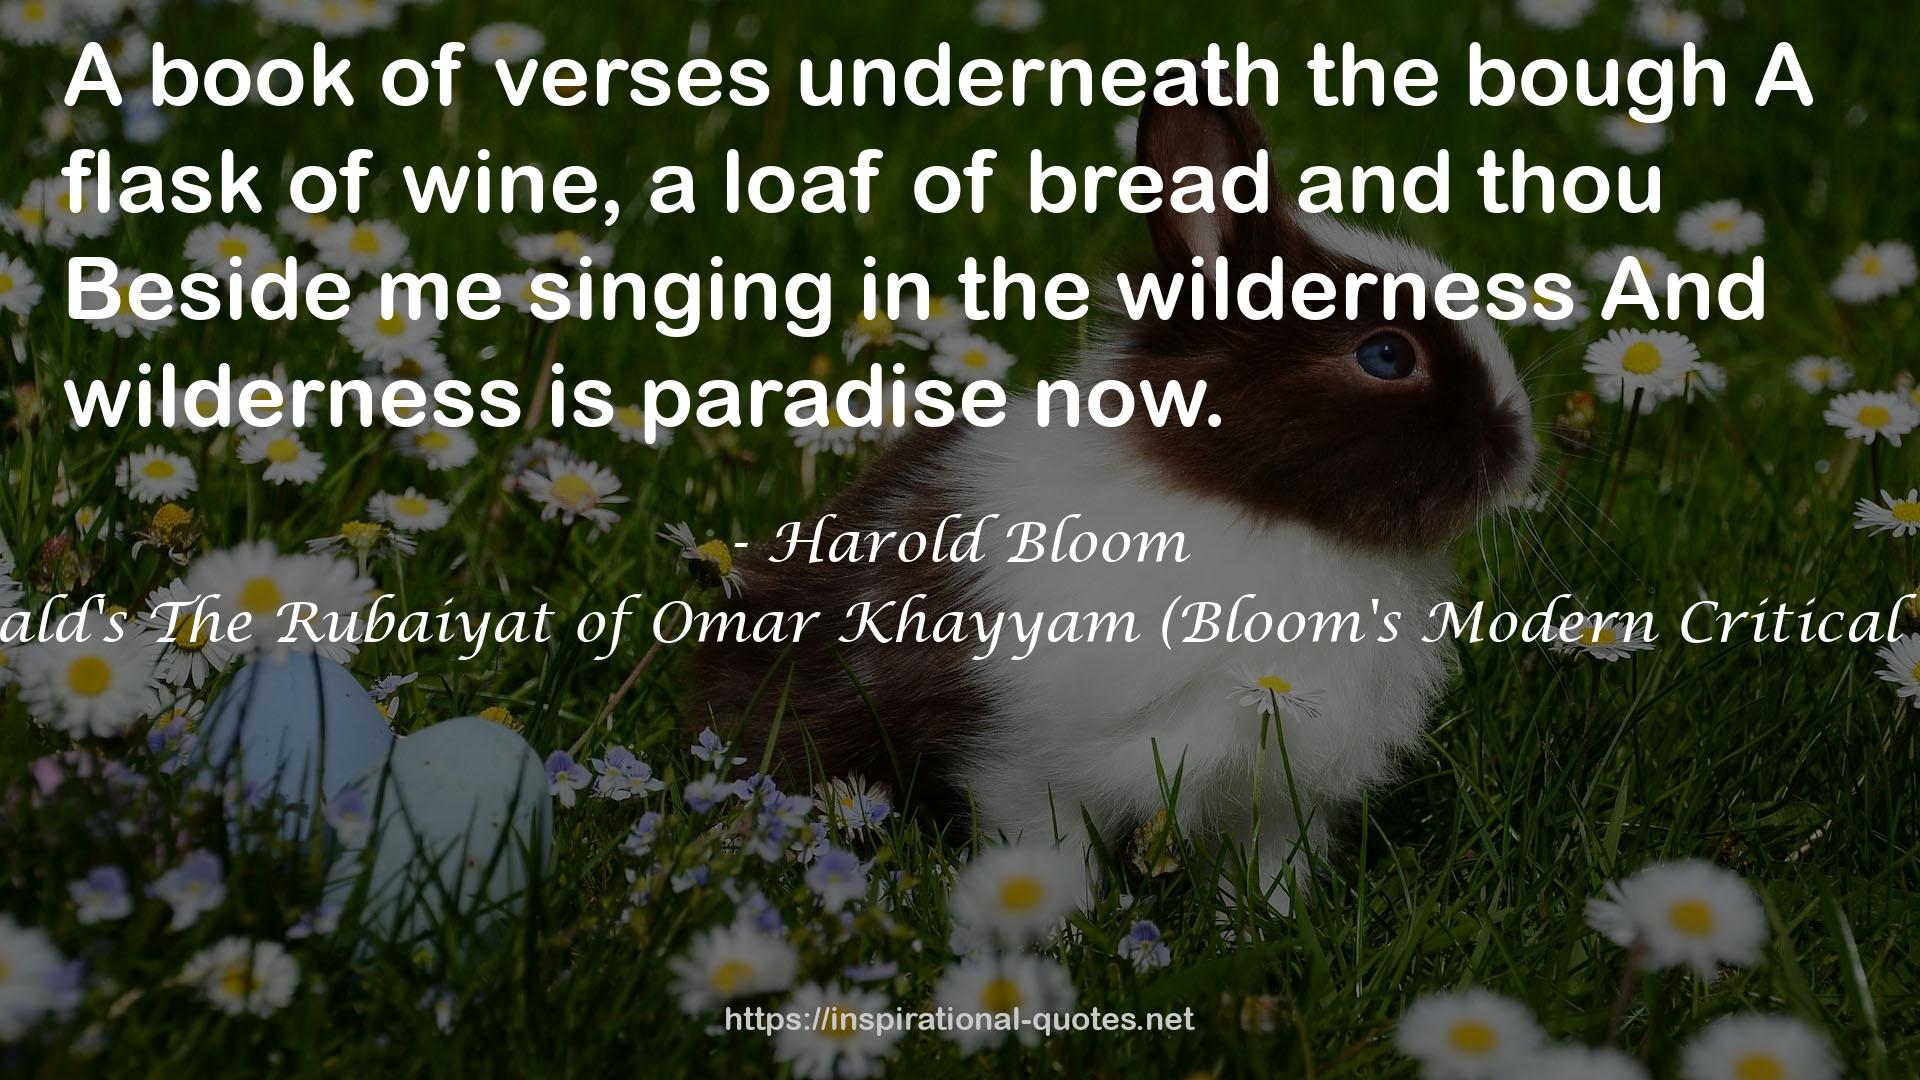 Edward Fitzgerald's The Rubaiyat of Omar Khayyam (Bloom's Modern Critical Interpretations) QUOTES